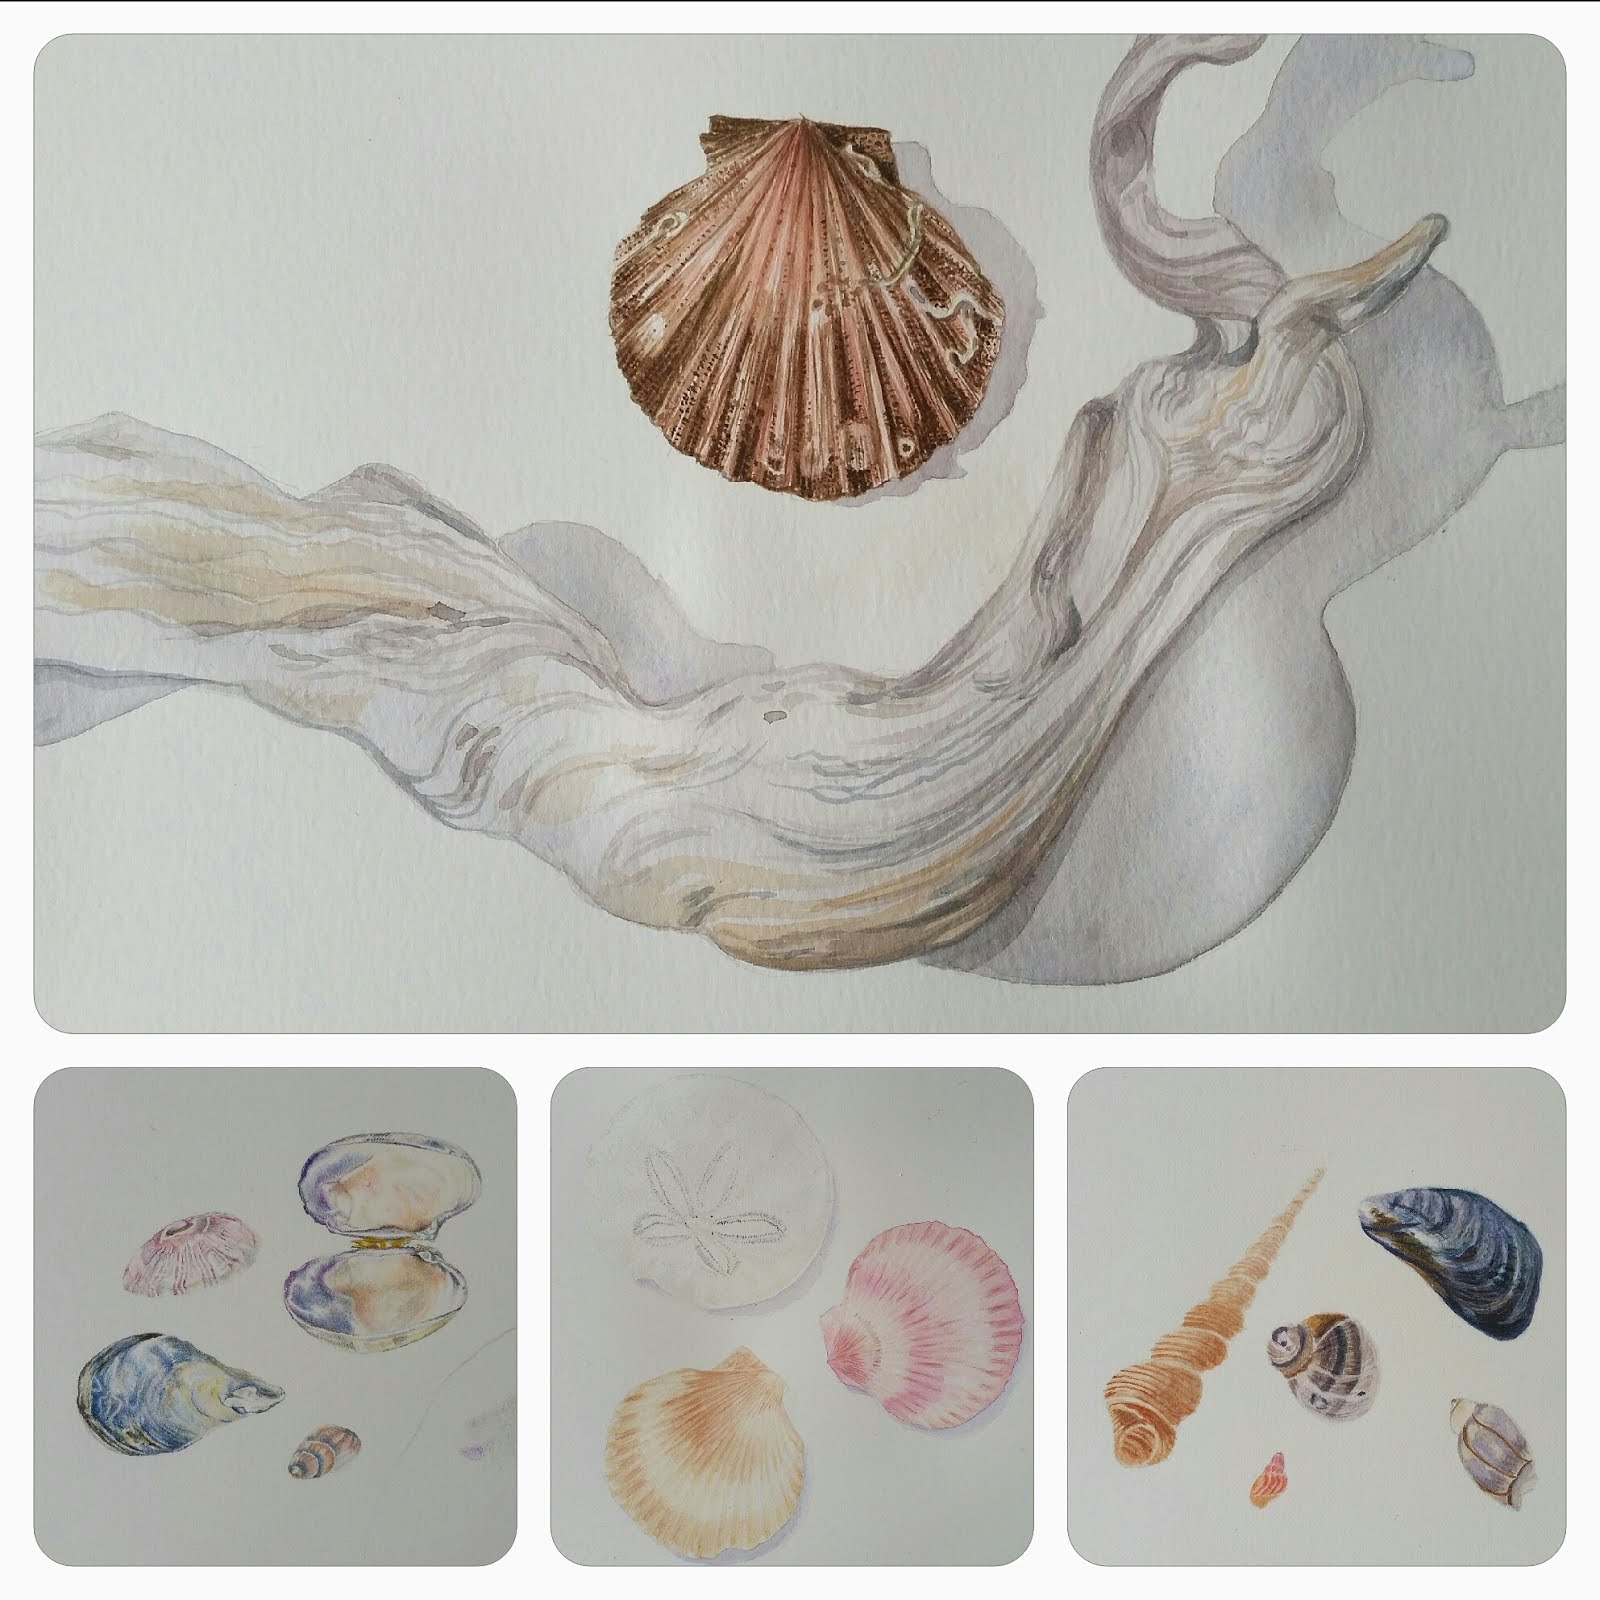 Student's work - The Seashore Palette